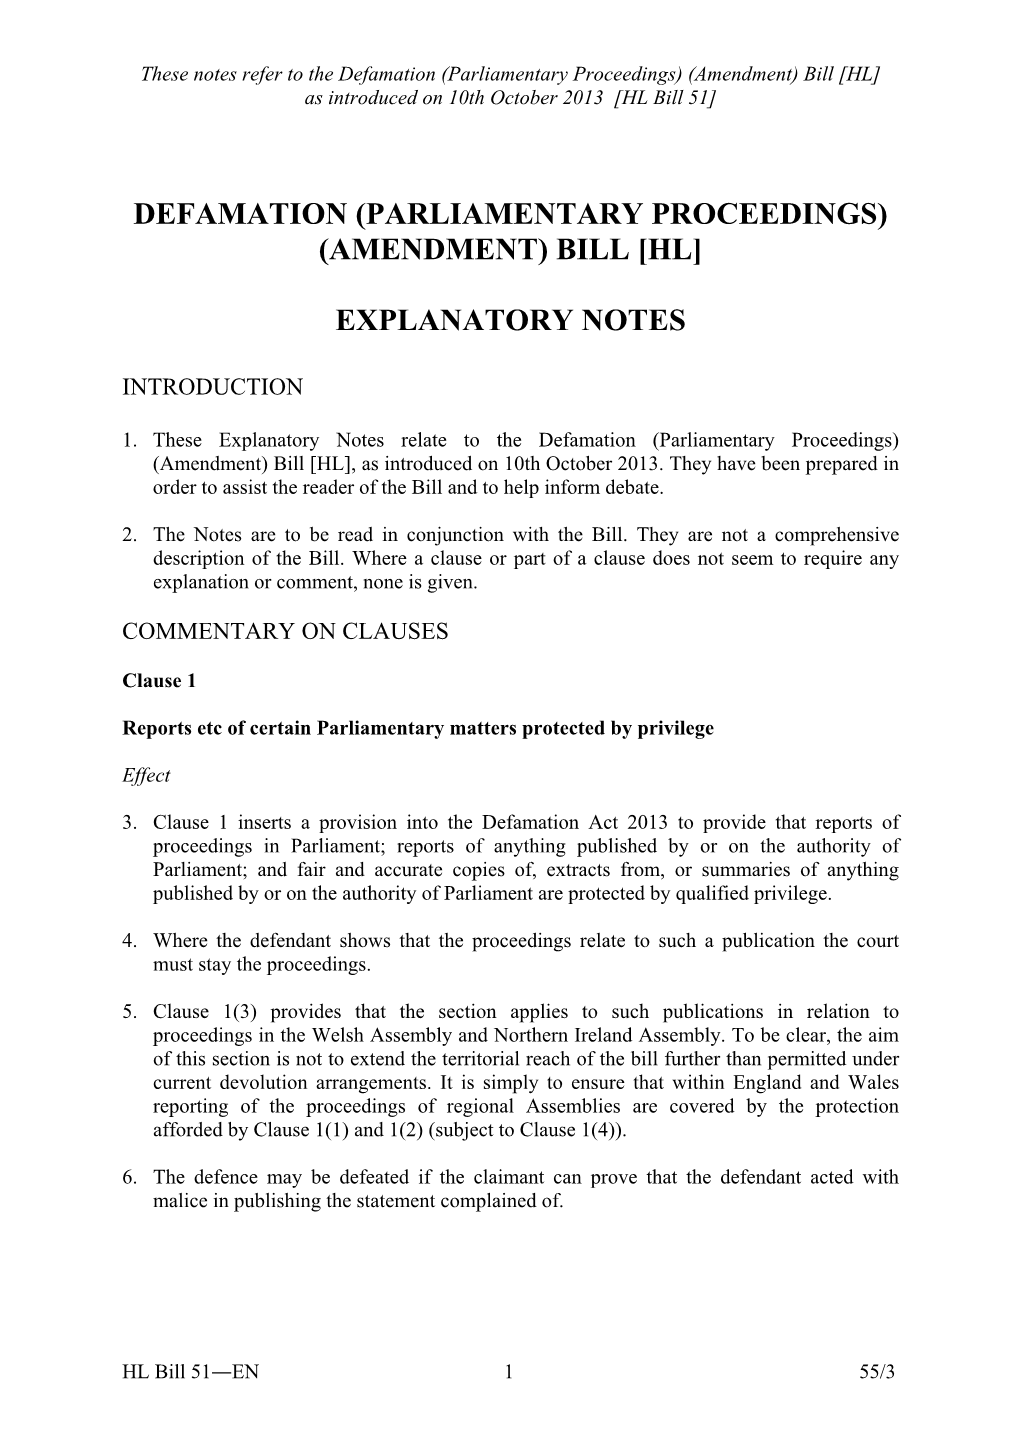 Defamation (Parliamentary Proceedings) (Amendment) Bill [HL] As Introduced on 10Th October 2013 [HL Bill 51]